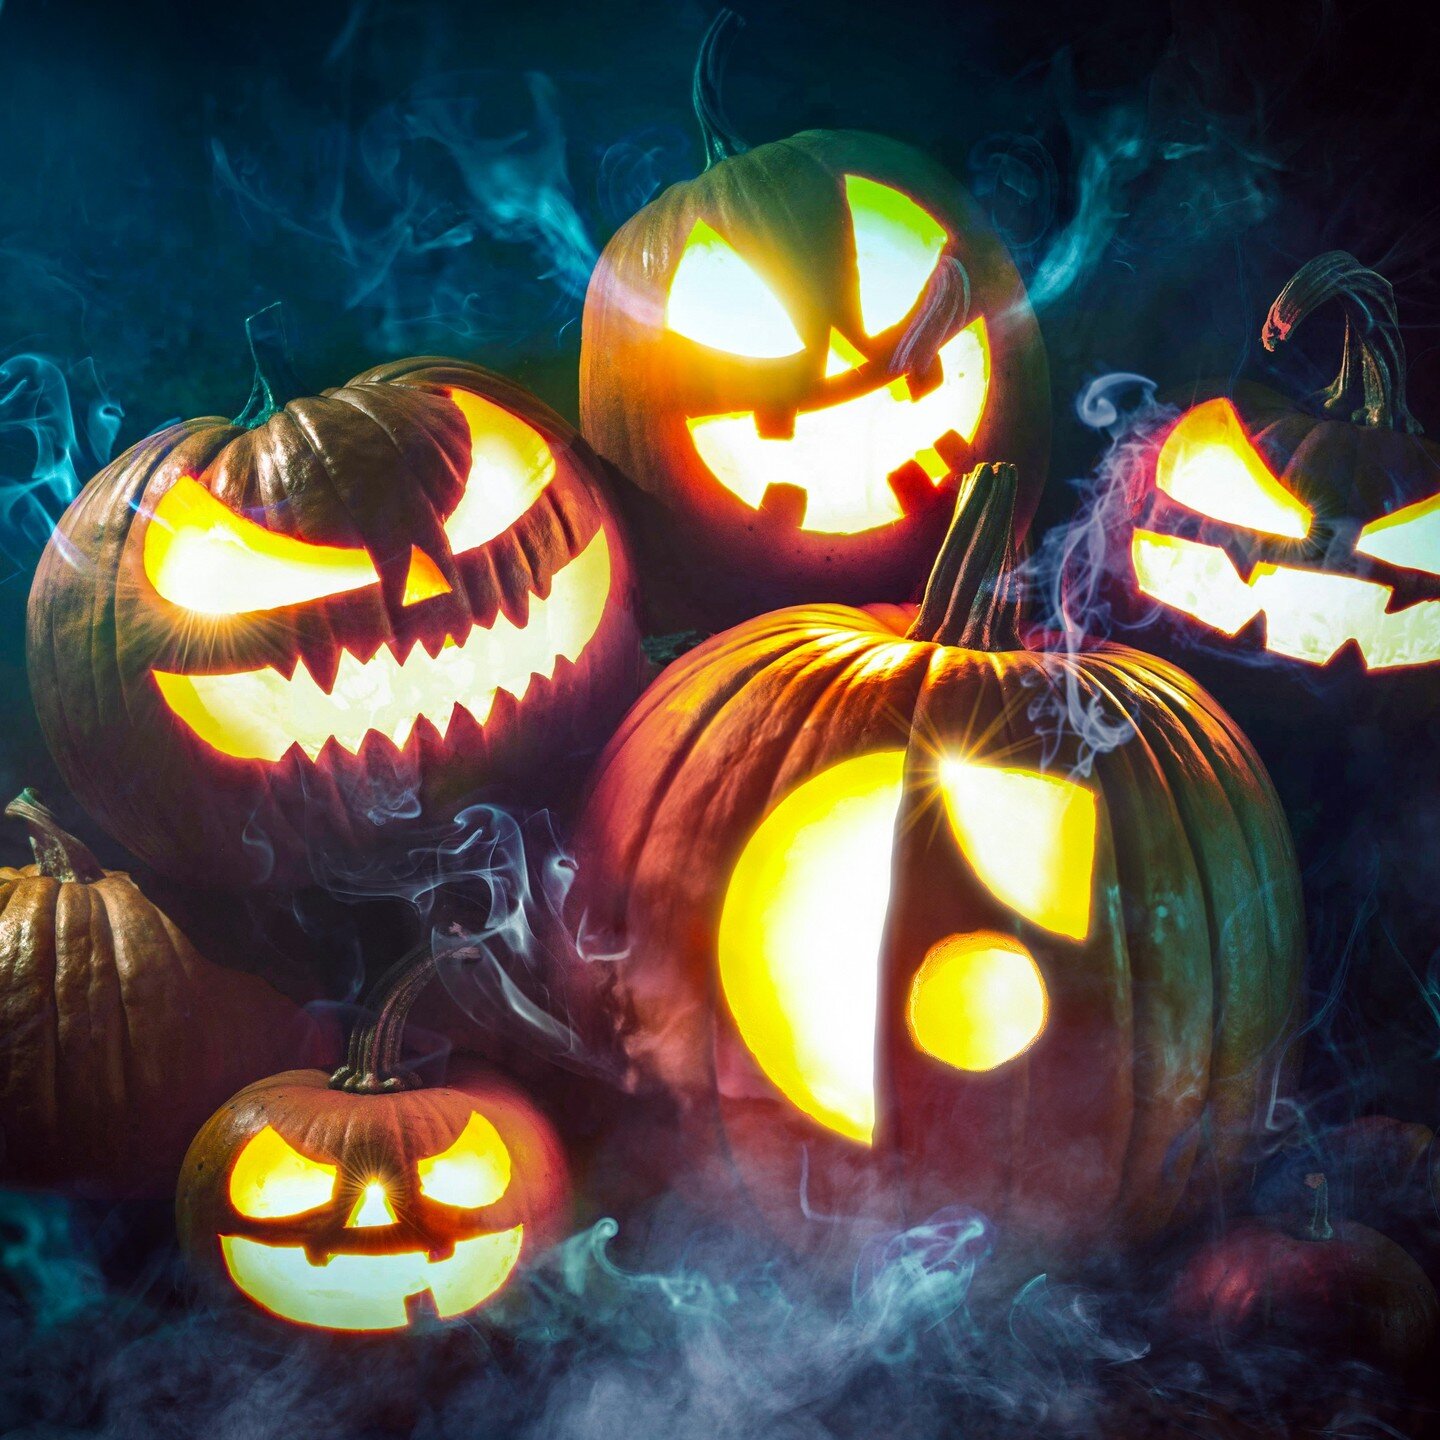 No photos. No problem. Happy Halloween from the Fruitful freaks 🎃👻🍬🦇💀🧡🕷️

#halloween #spooky #horror #spookyseason #october #happyhalloween #art #pumpkin #trickortreat